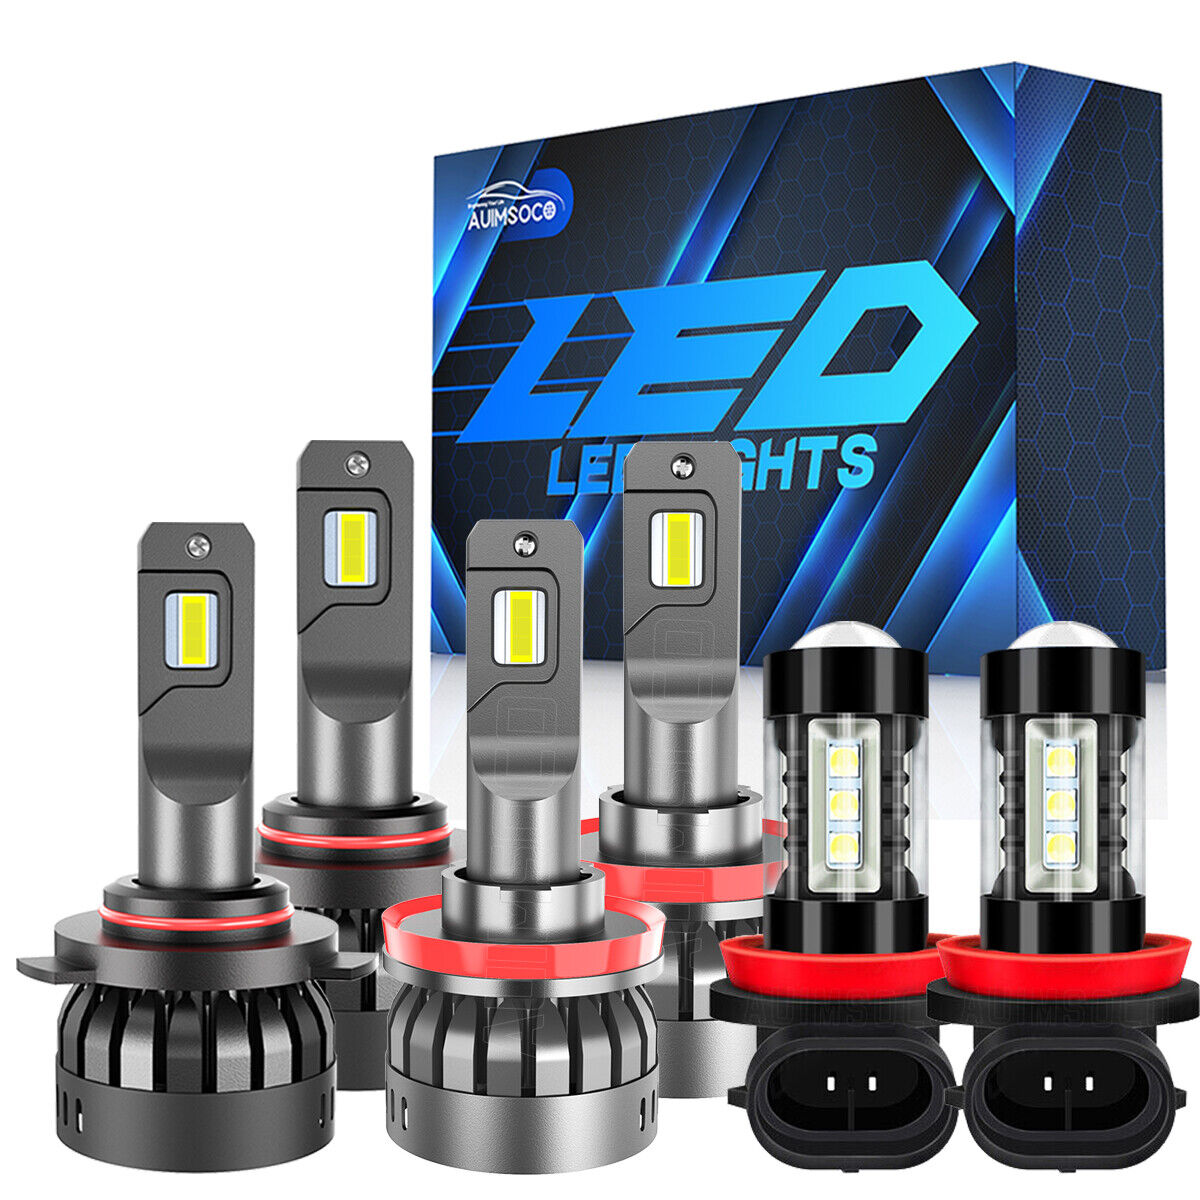 For Volvo C70 2006 - 2012 2013 Combo LED Headlight Hi/Lo + Fog Light Bulbs Kit